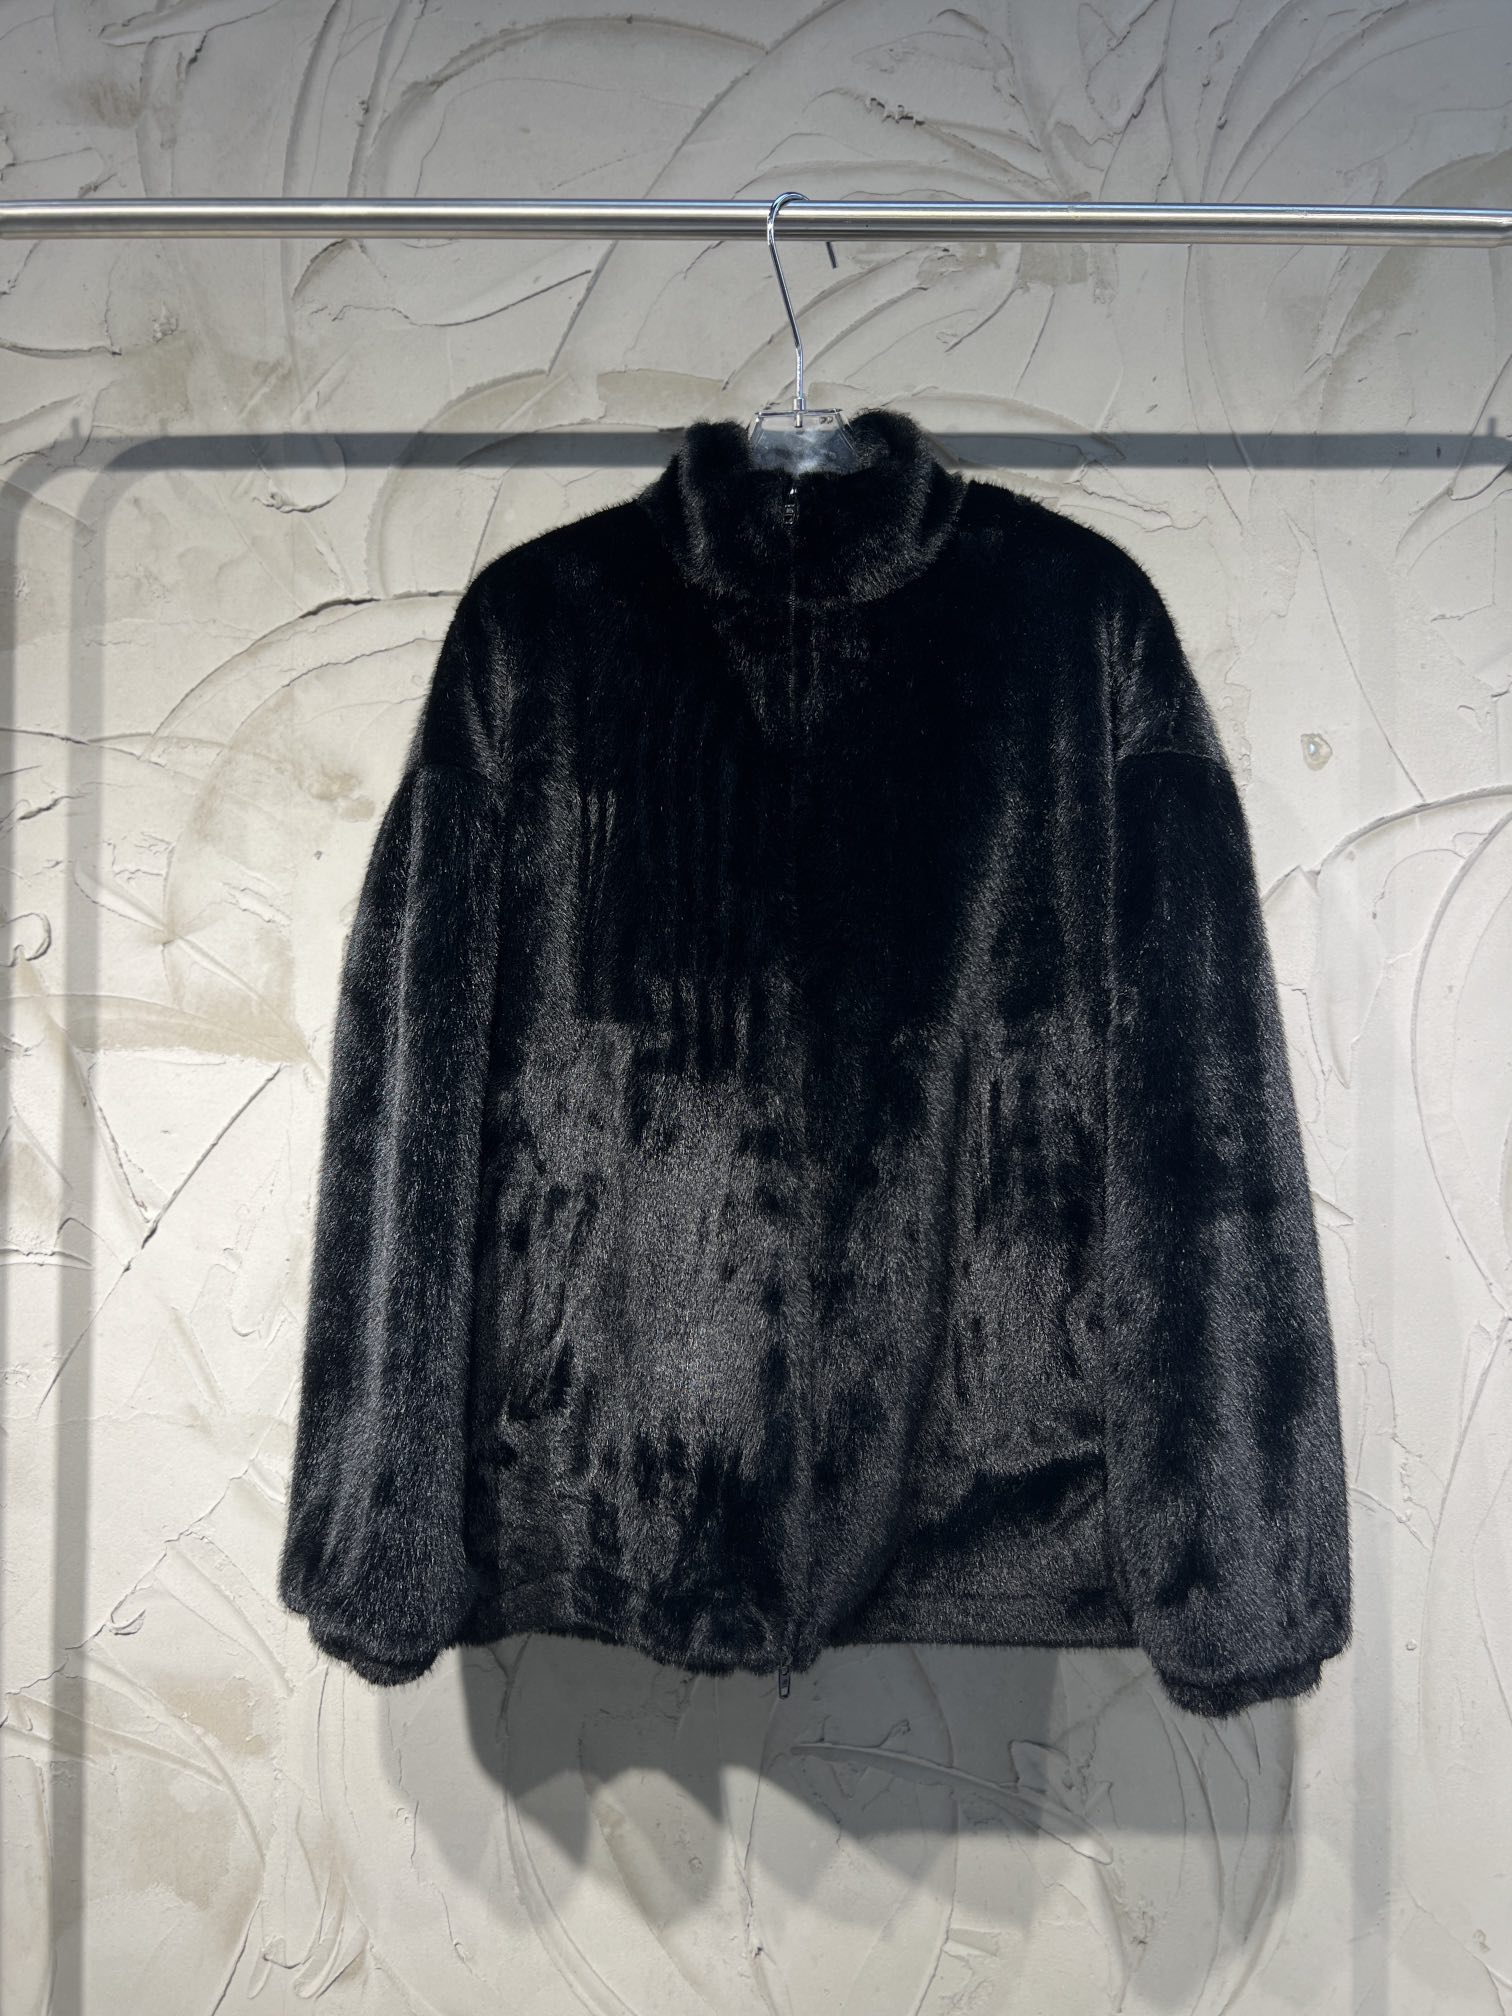 Balenciaga letter eco-friendly leather fur coat